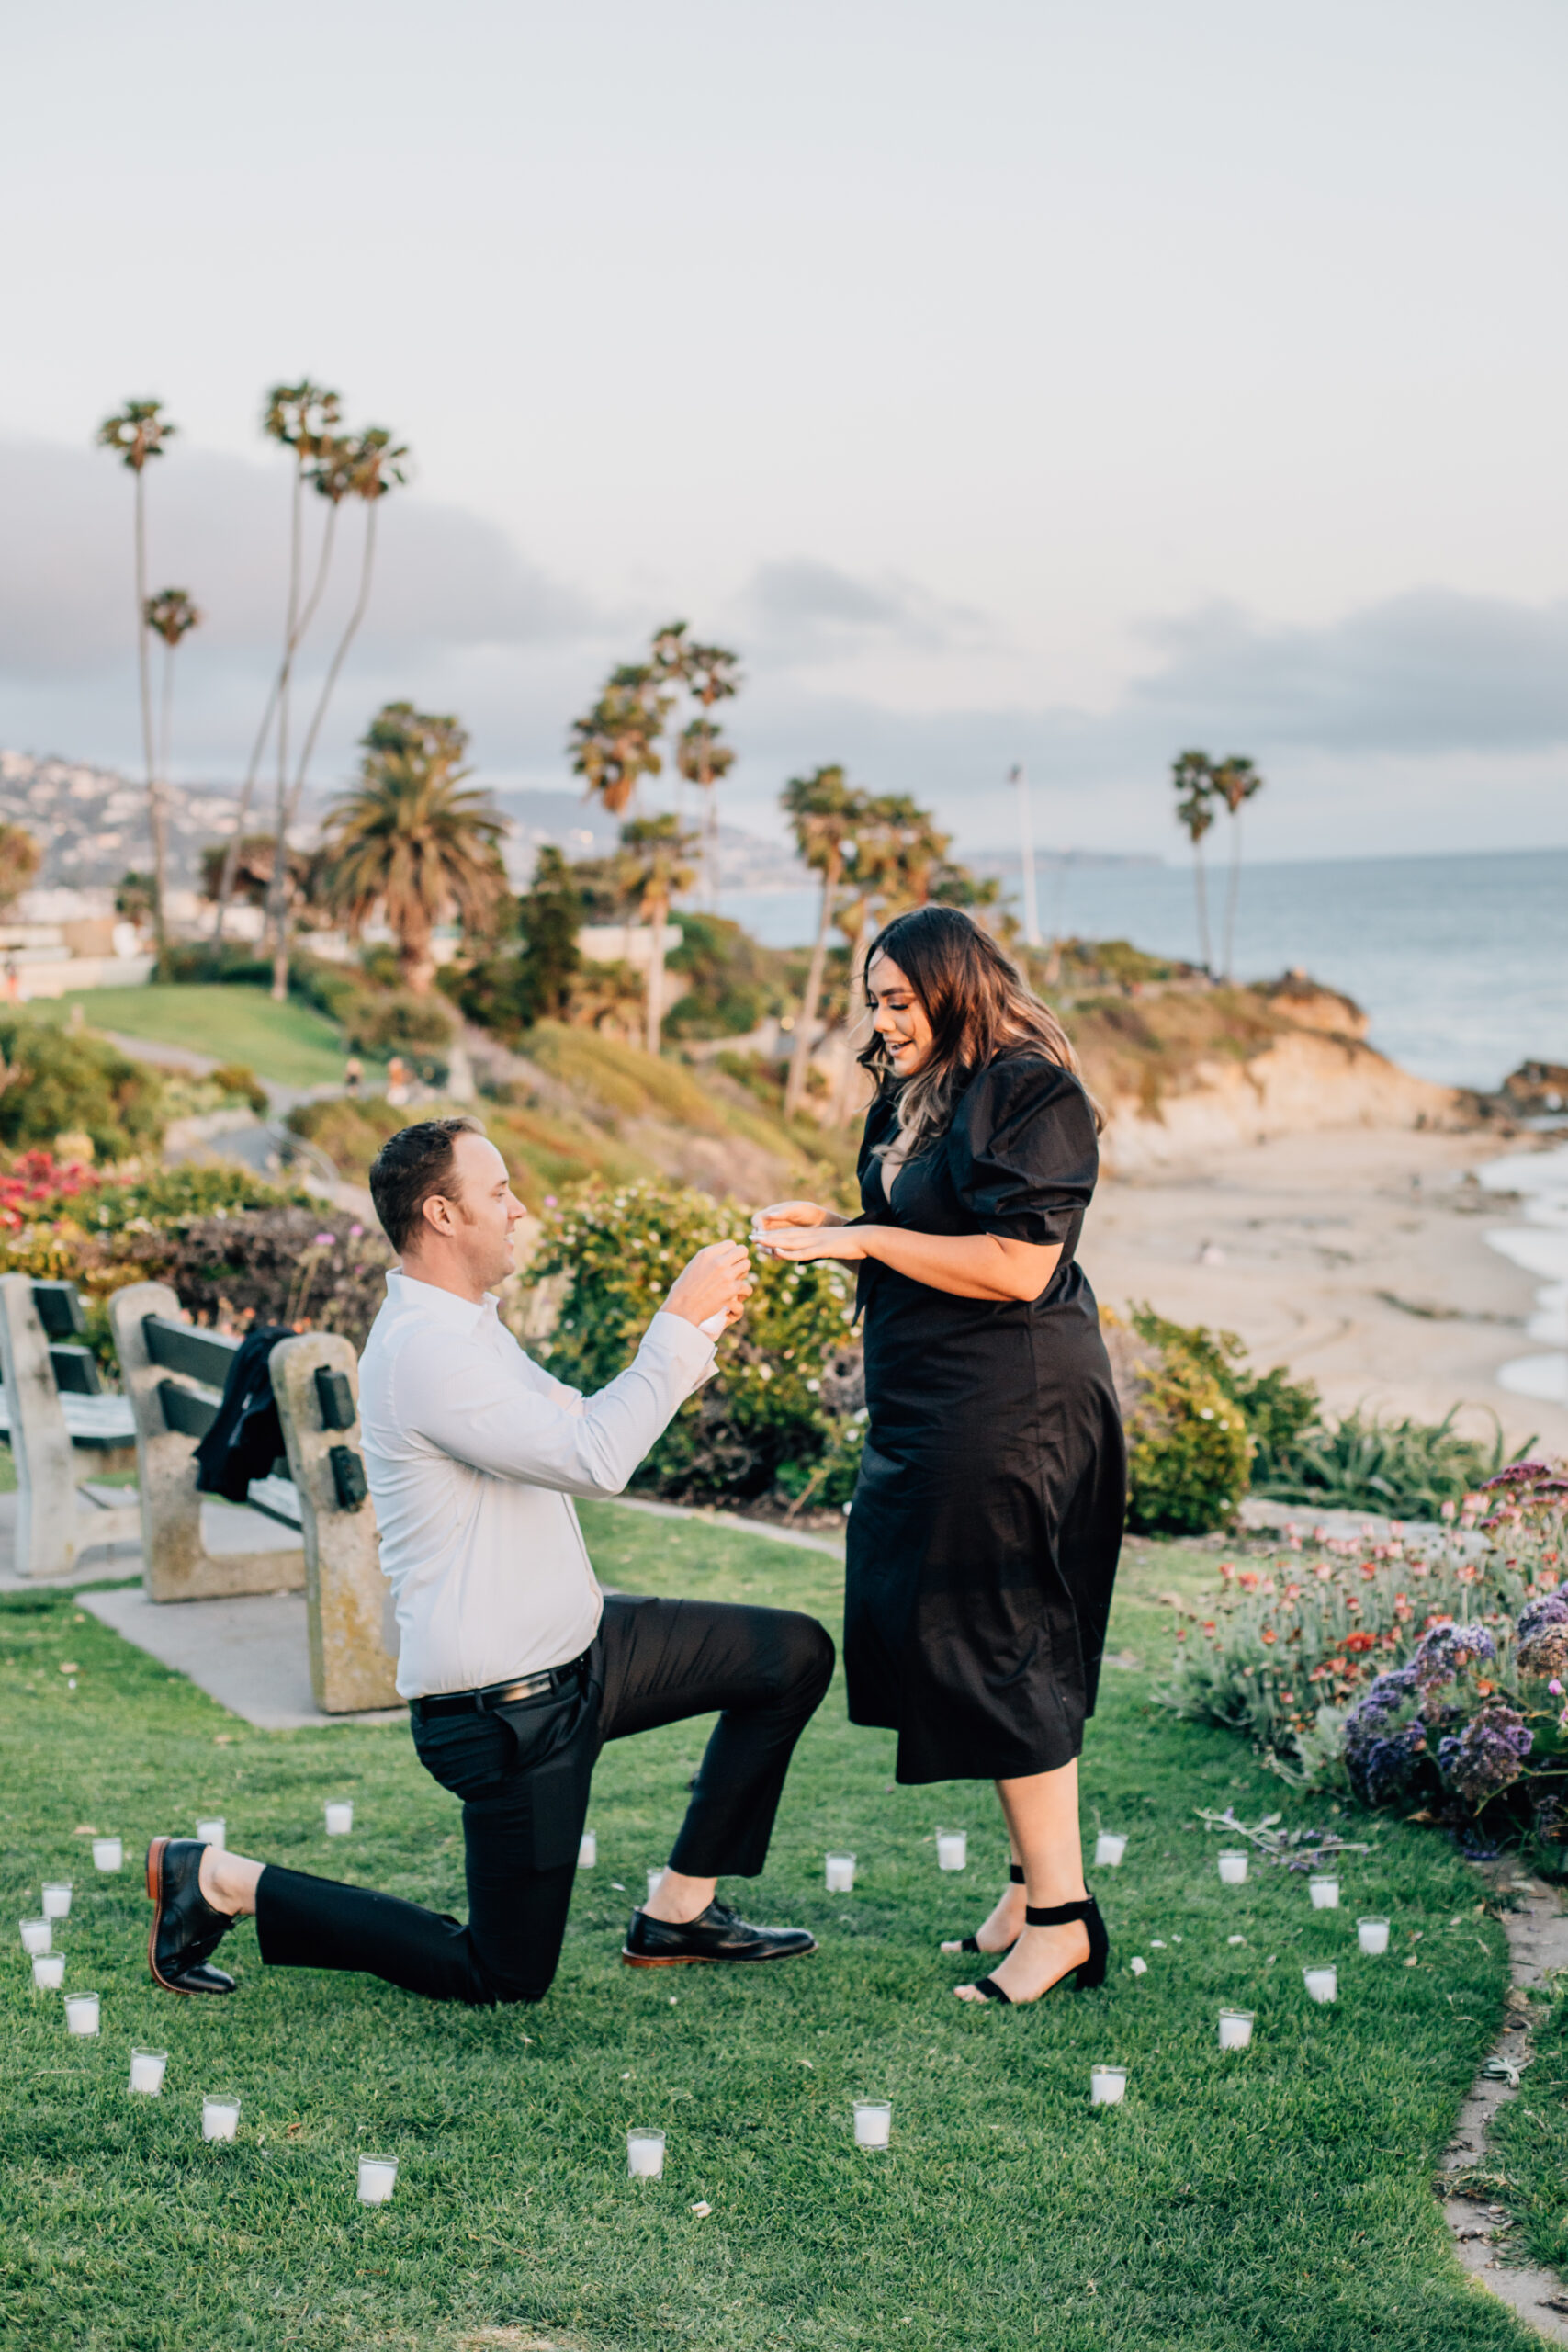 Wedding proposal at laguna beach